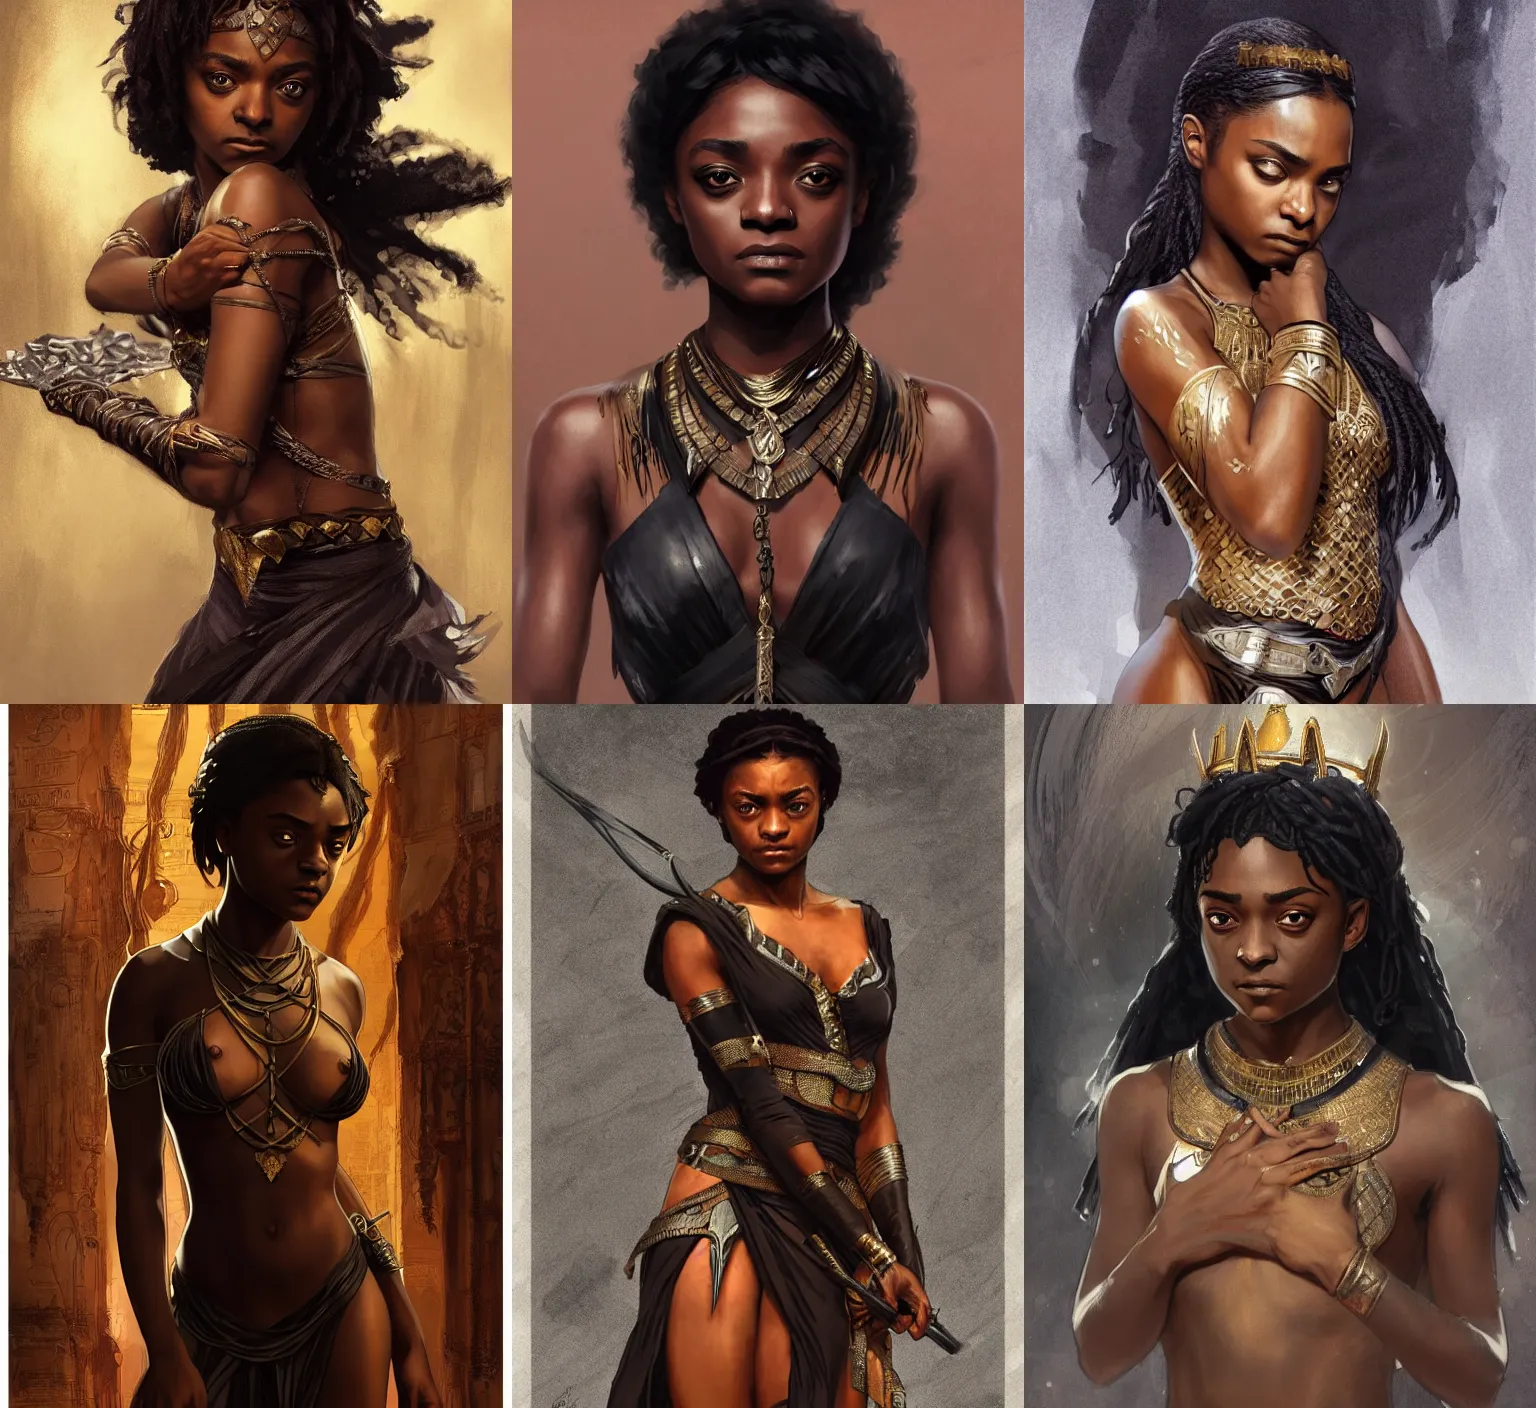 african princess warrior